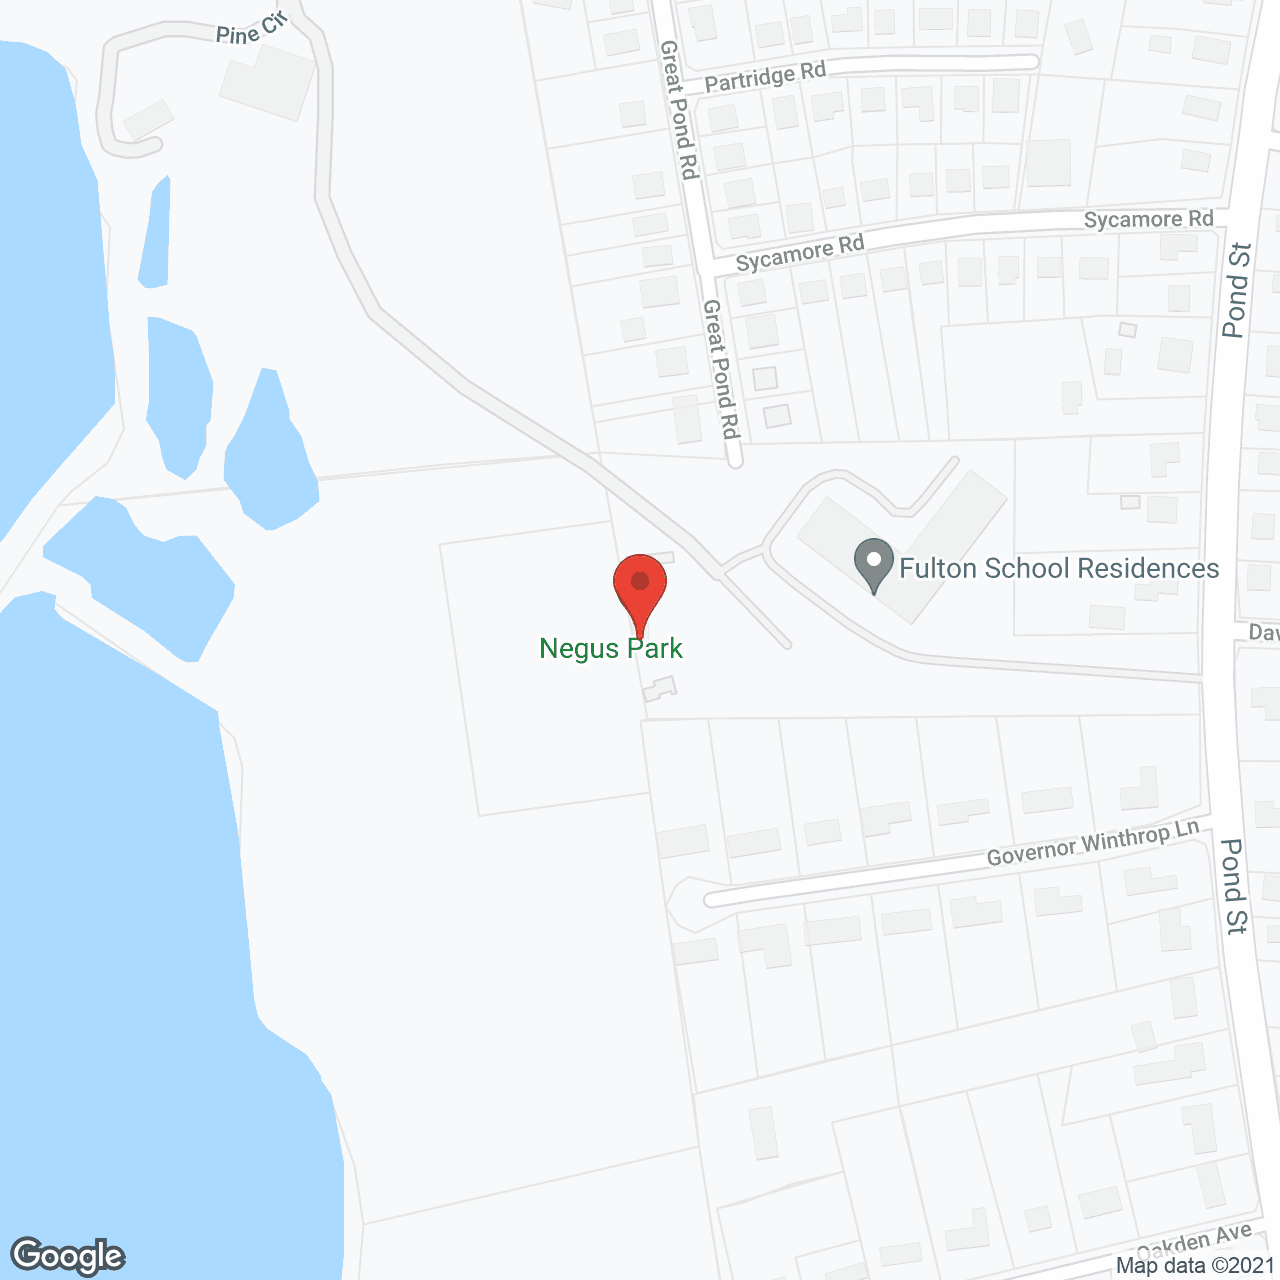 Fulton School Residences in google map